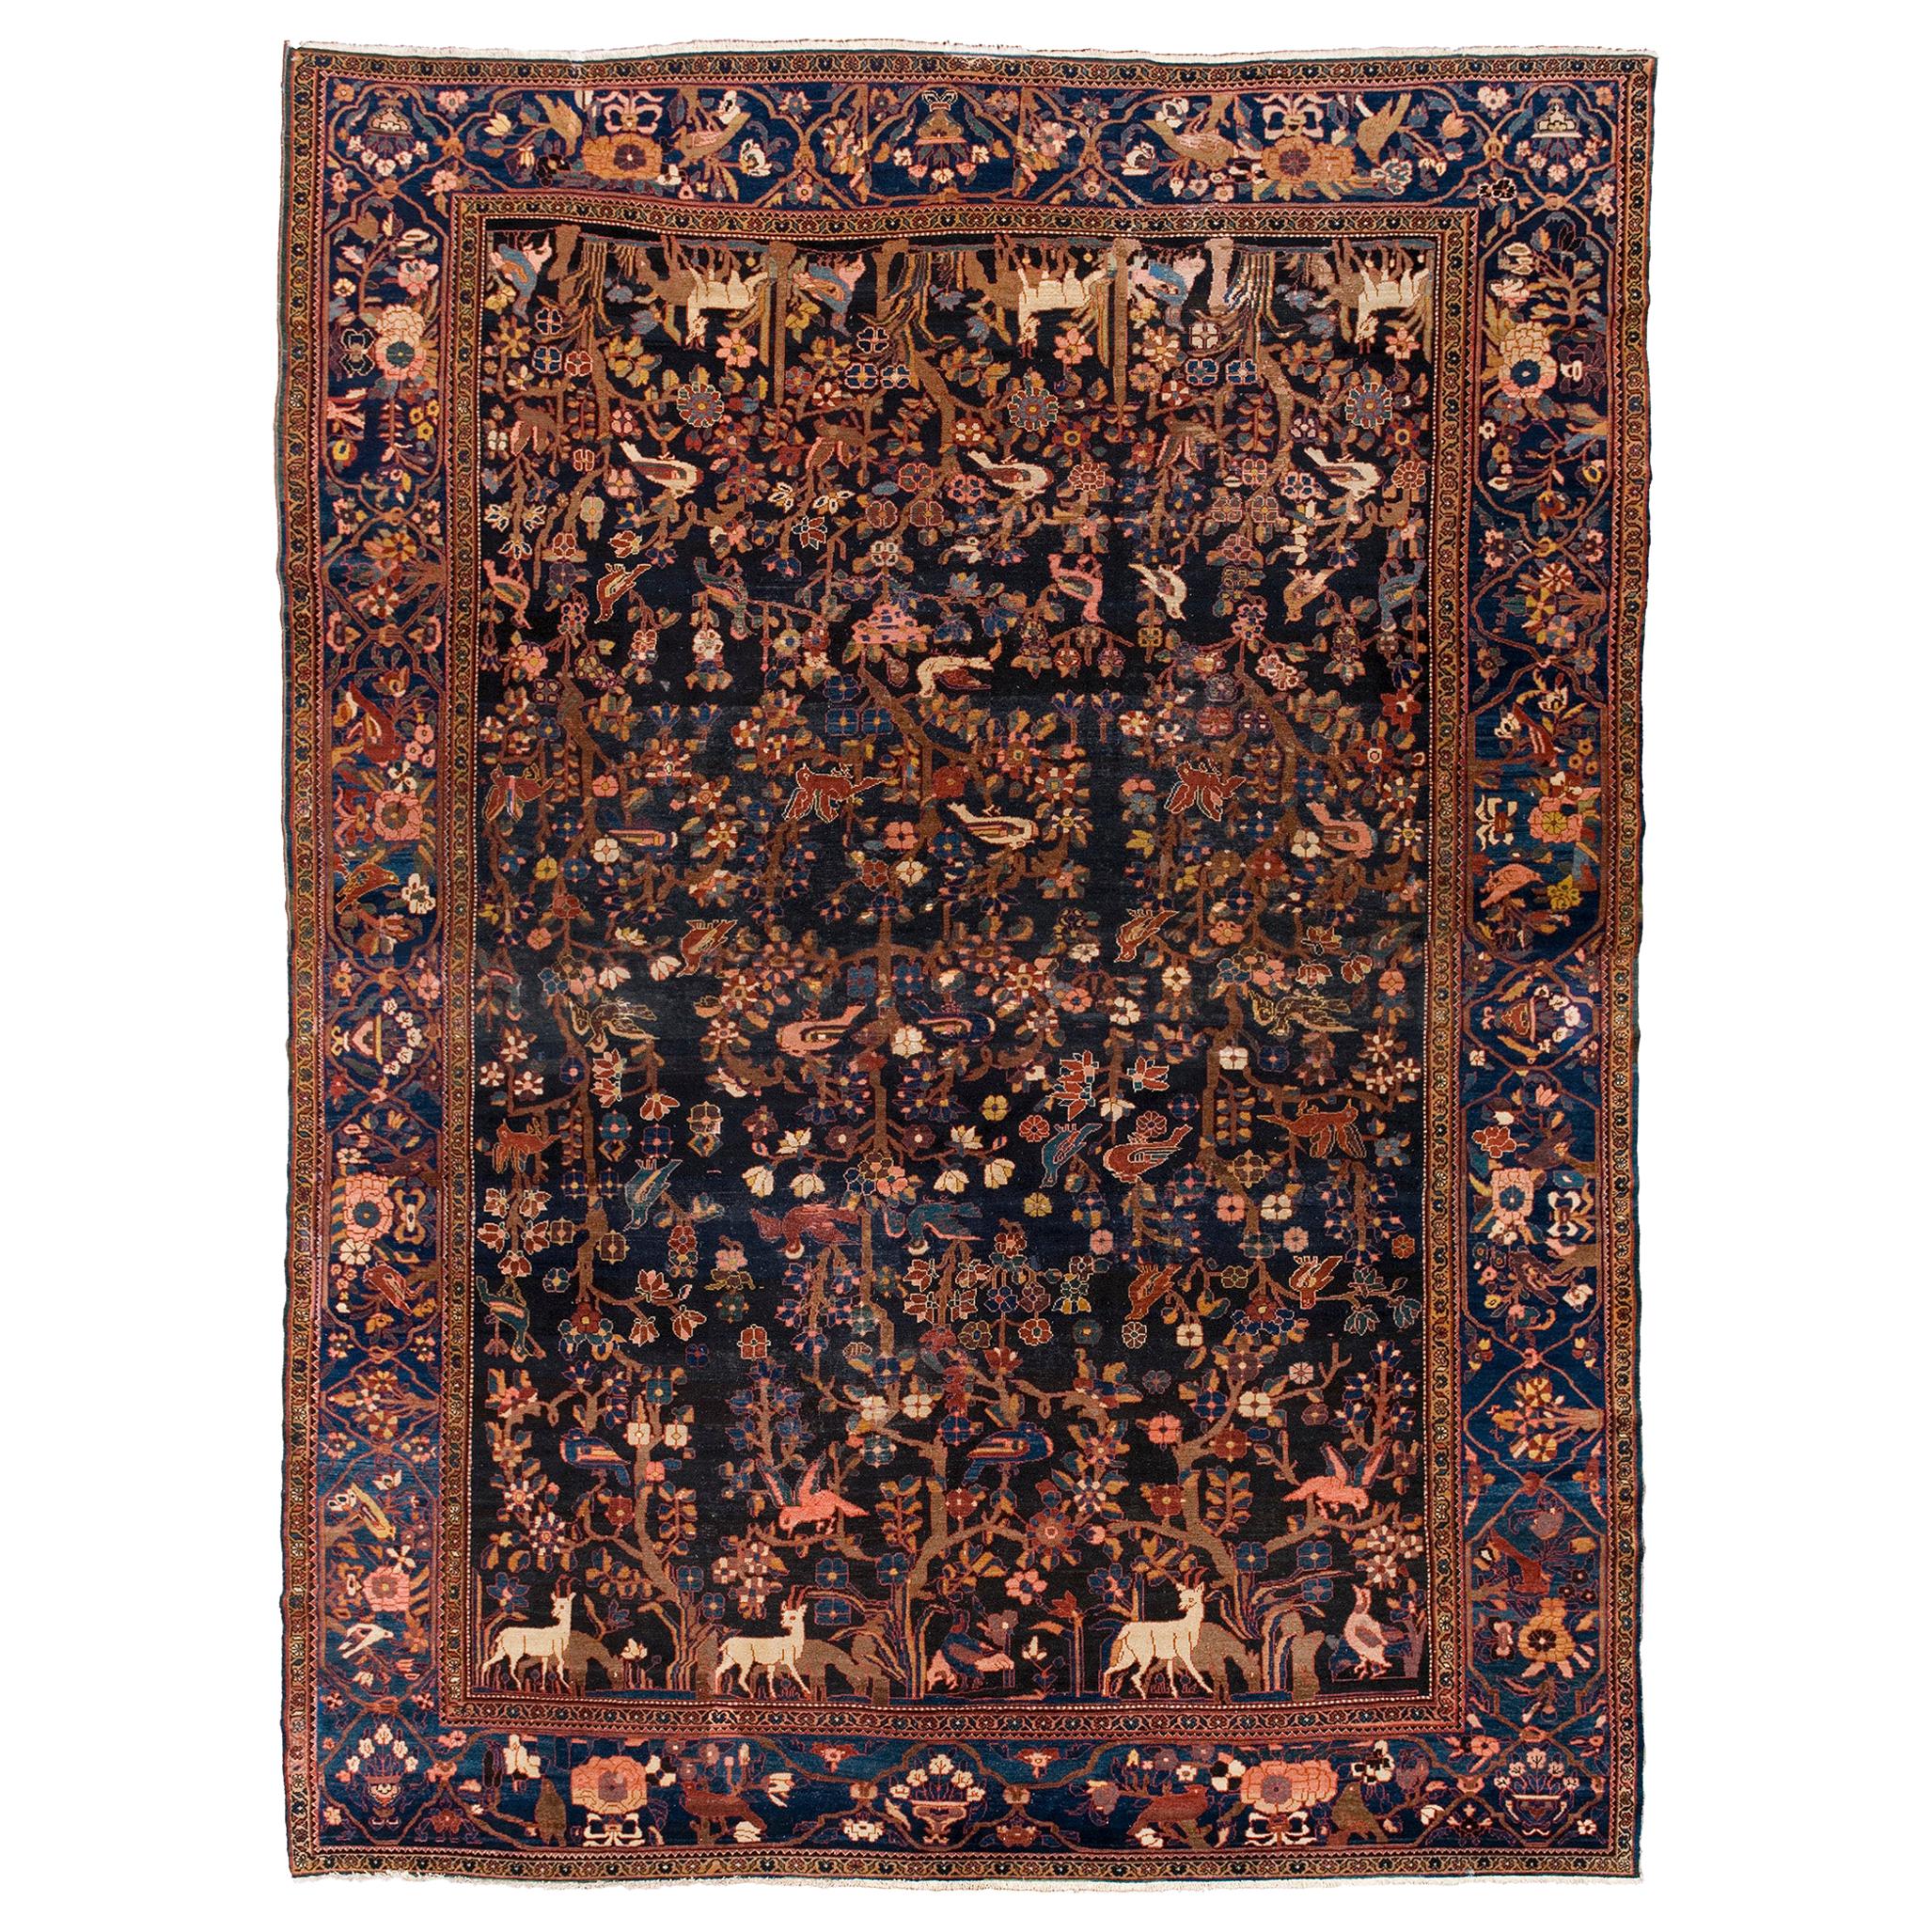 Early 20th Century Persian Malayer Rug